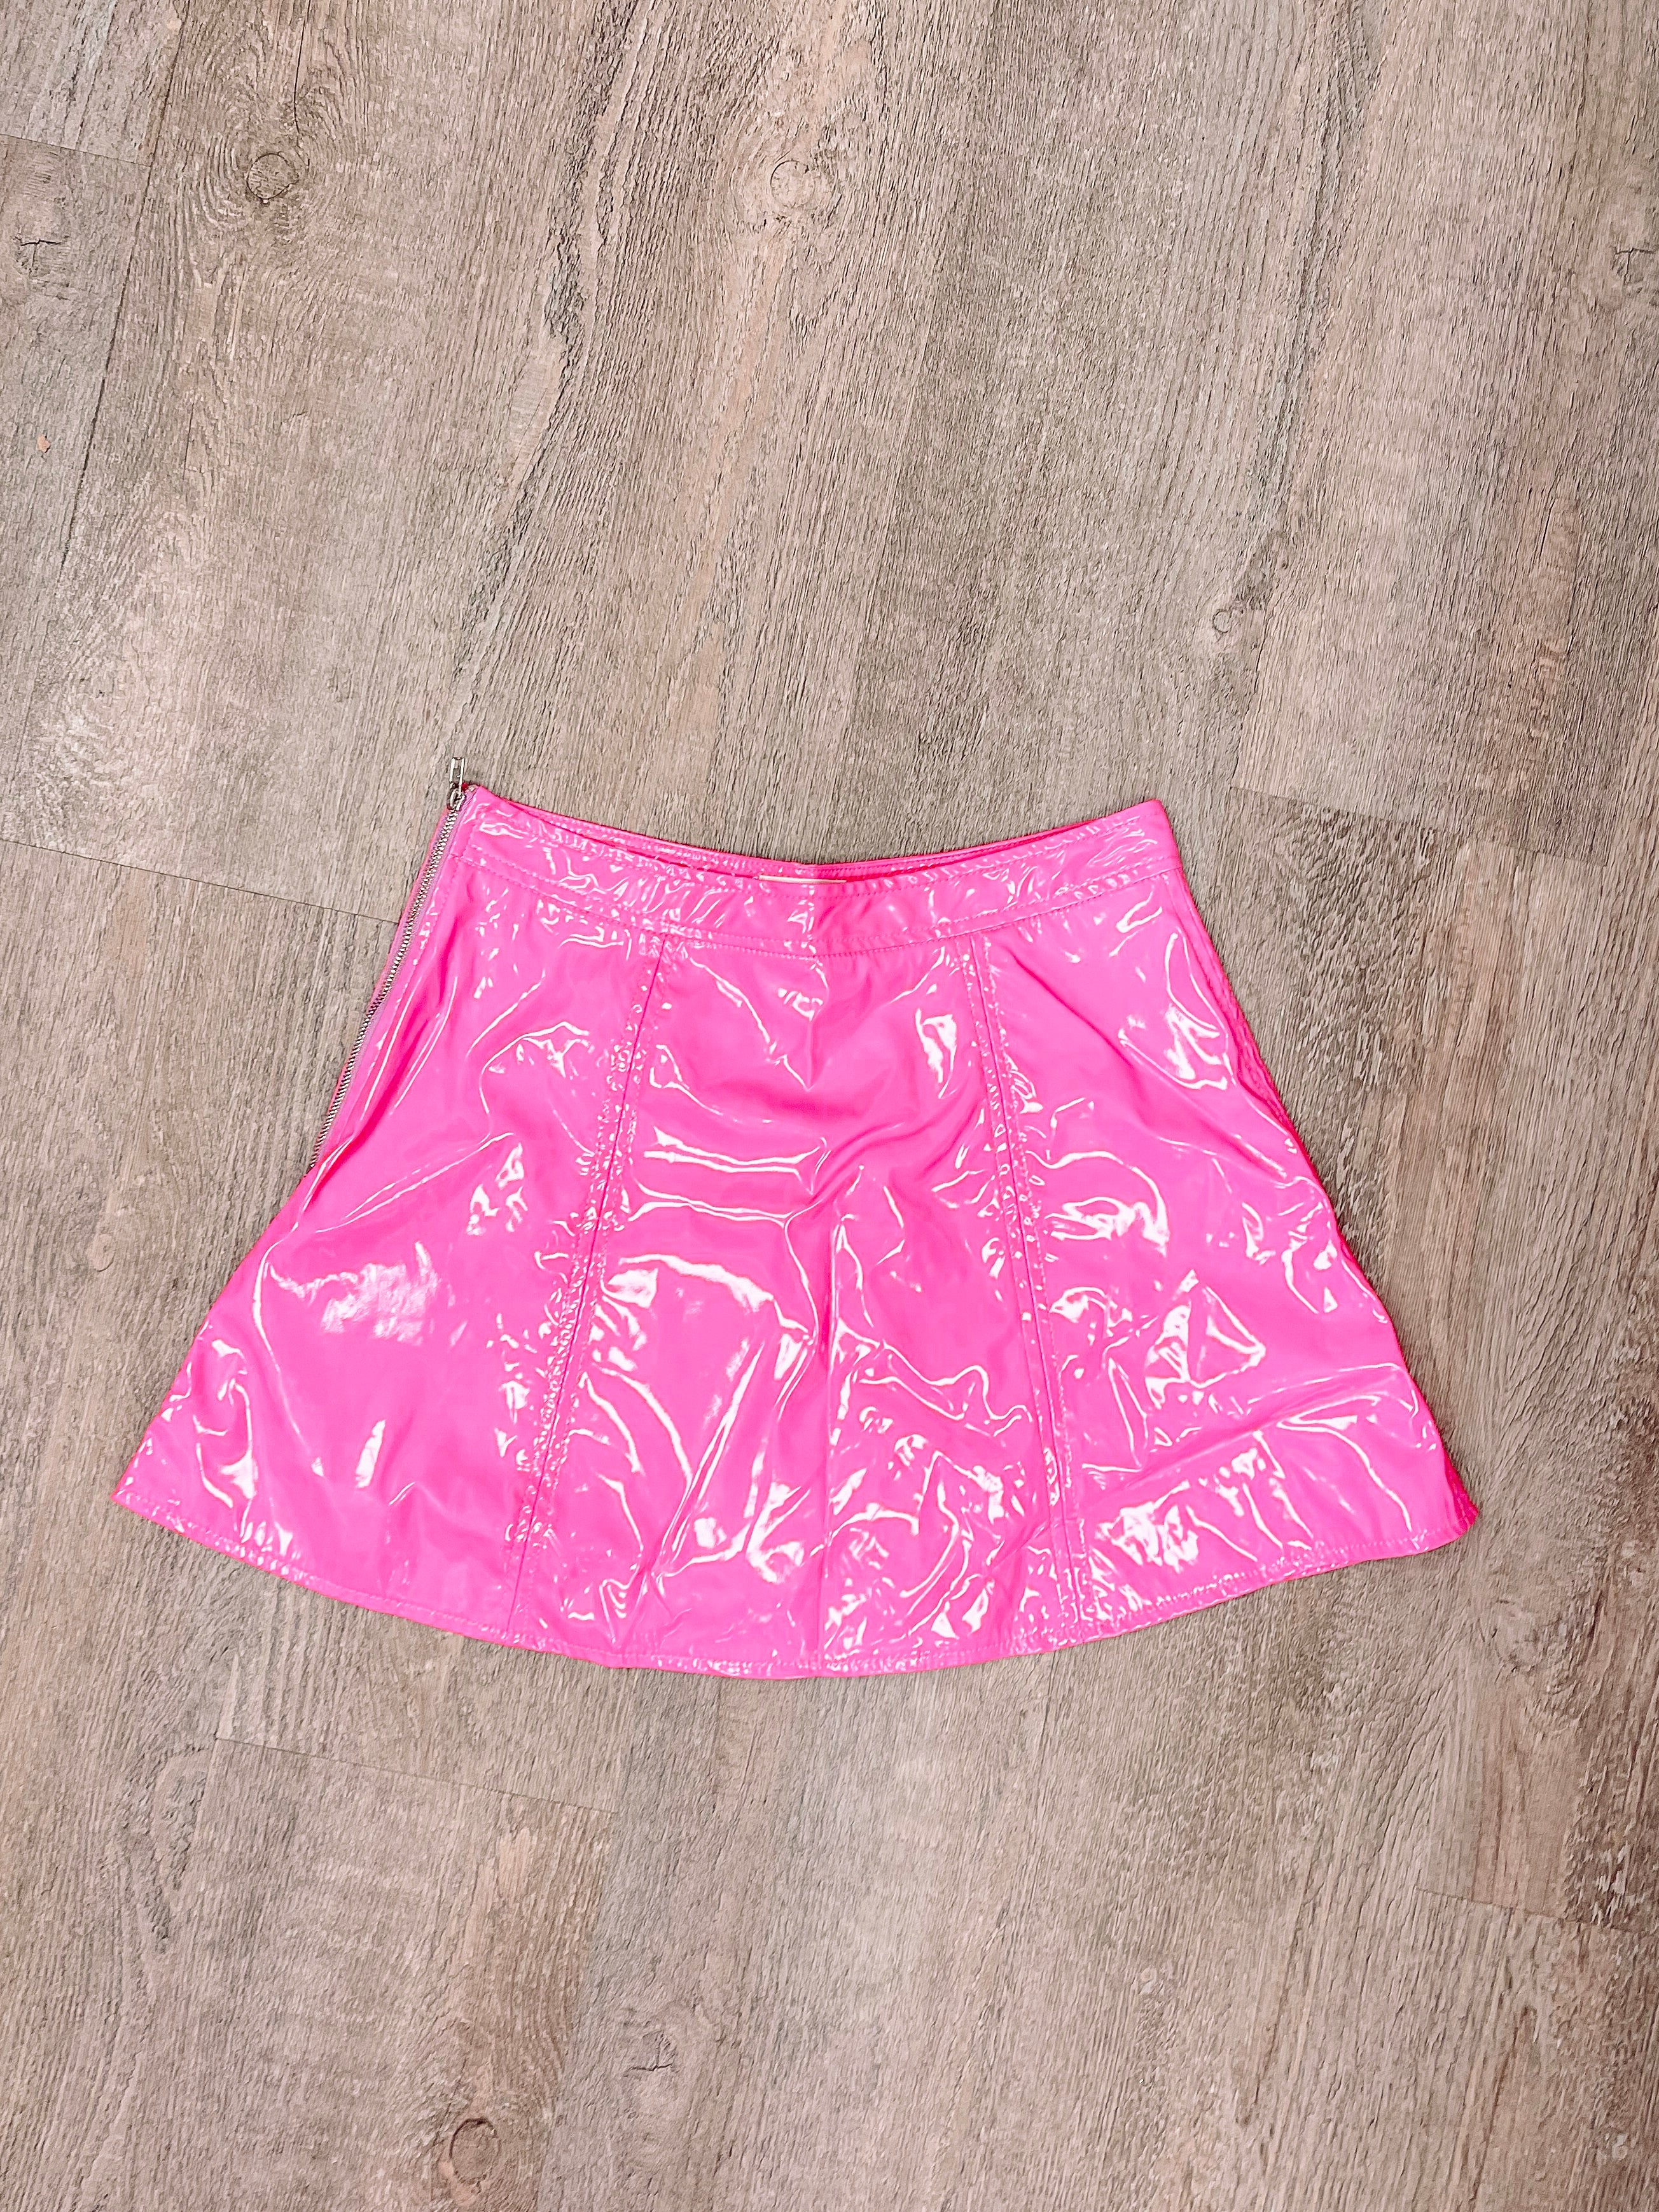 Life in Plastic is Fantastic Pink Skirt | Sassy Shortcake | sassyshortcake.com